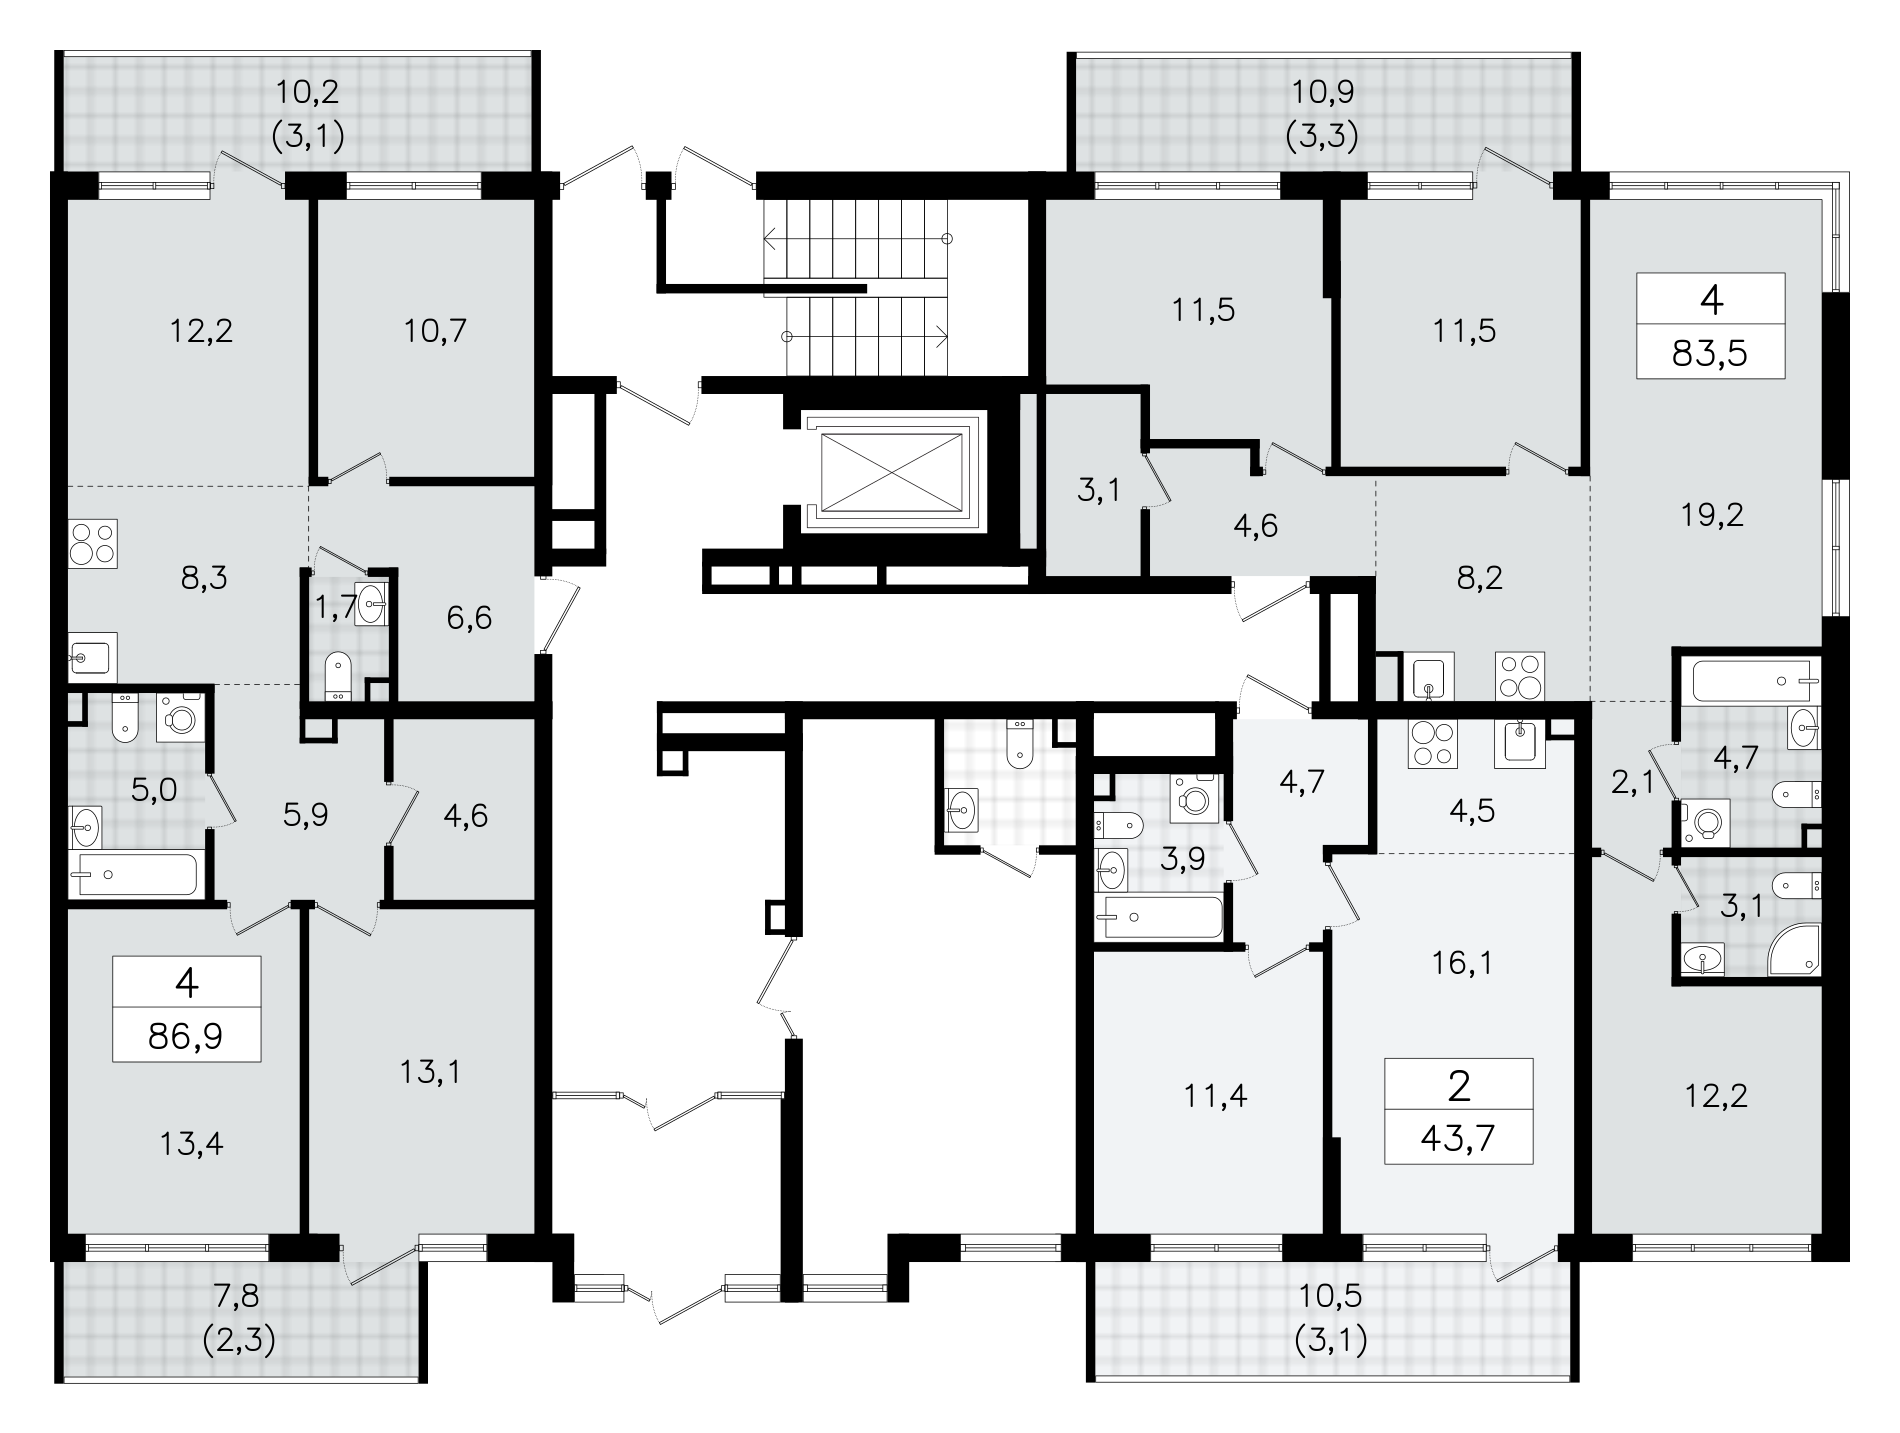 4-комнатная (Евро) квартира, 83.5 м² - планировка этажа